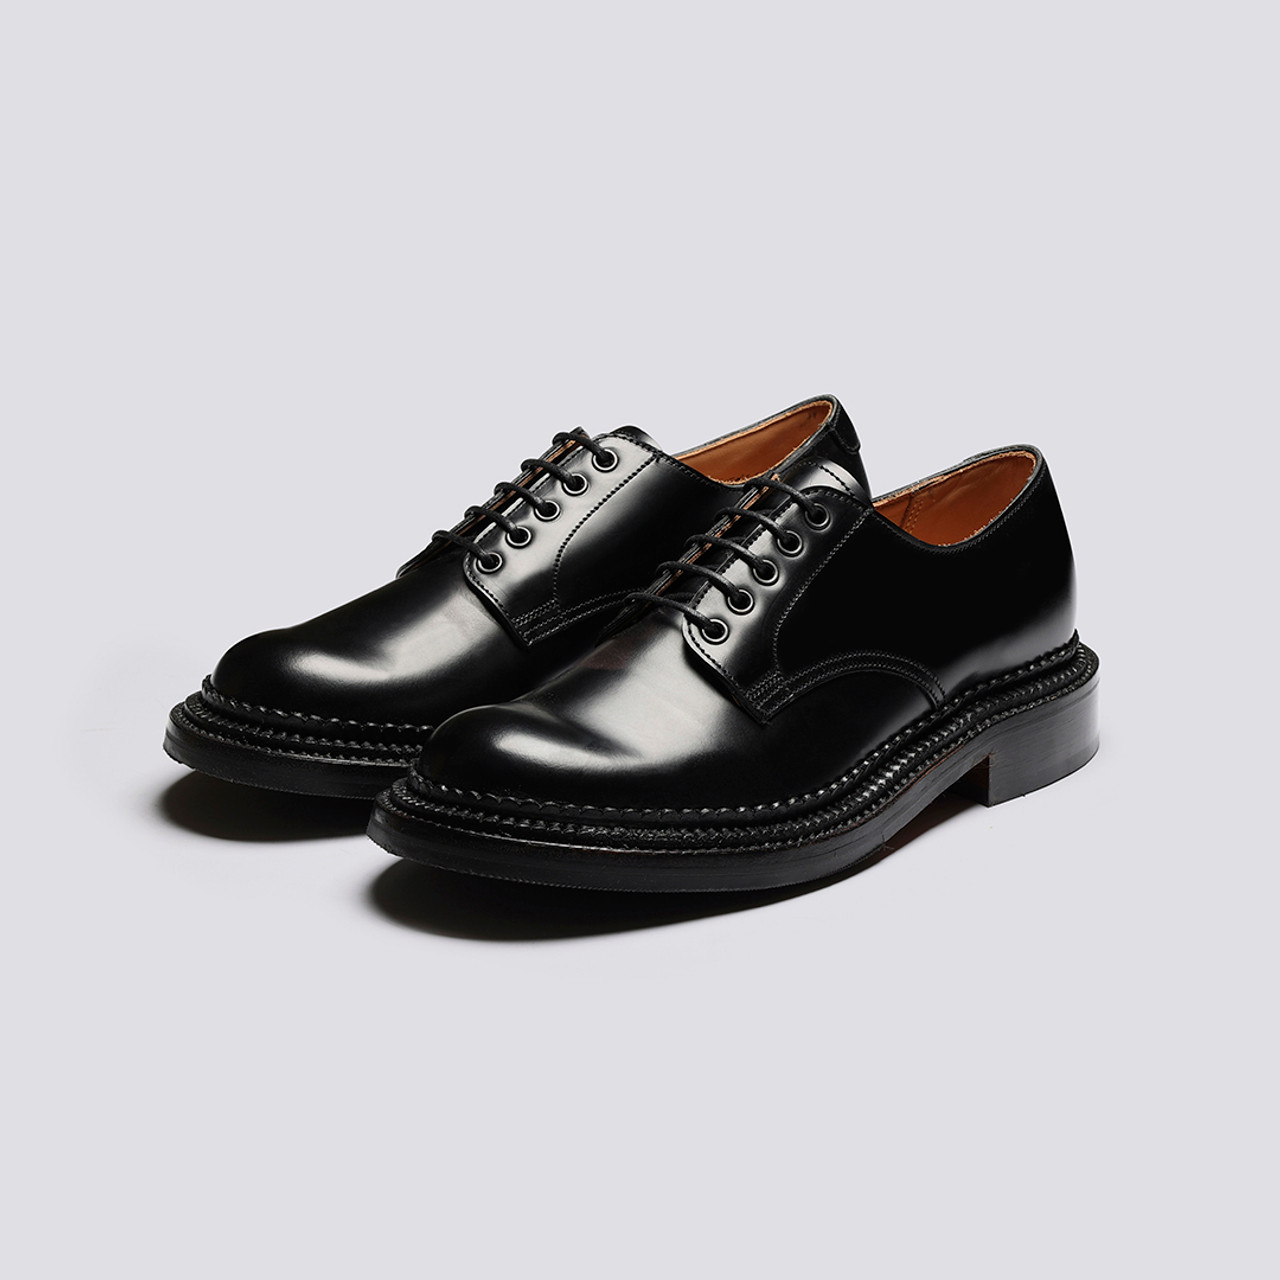 Devon | Womens Derby Shoes in Black Bookbinder Leather | Grenson